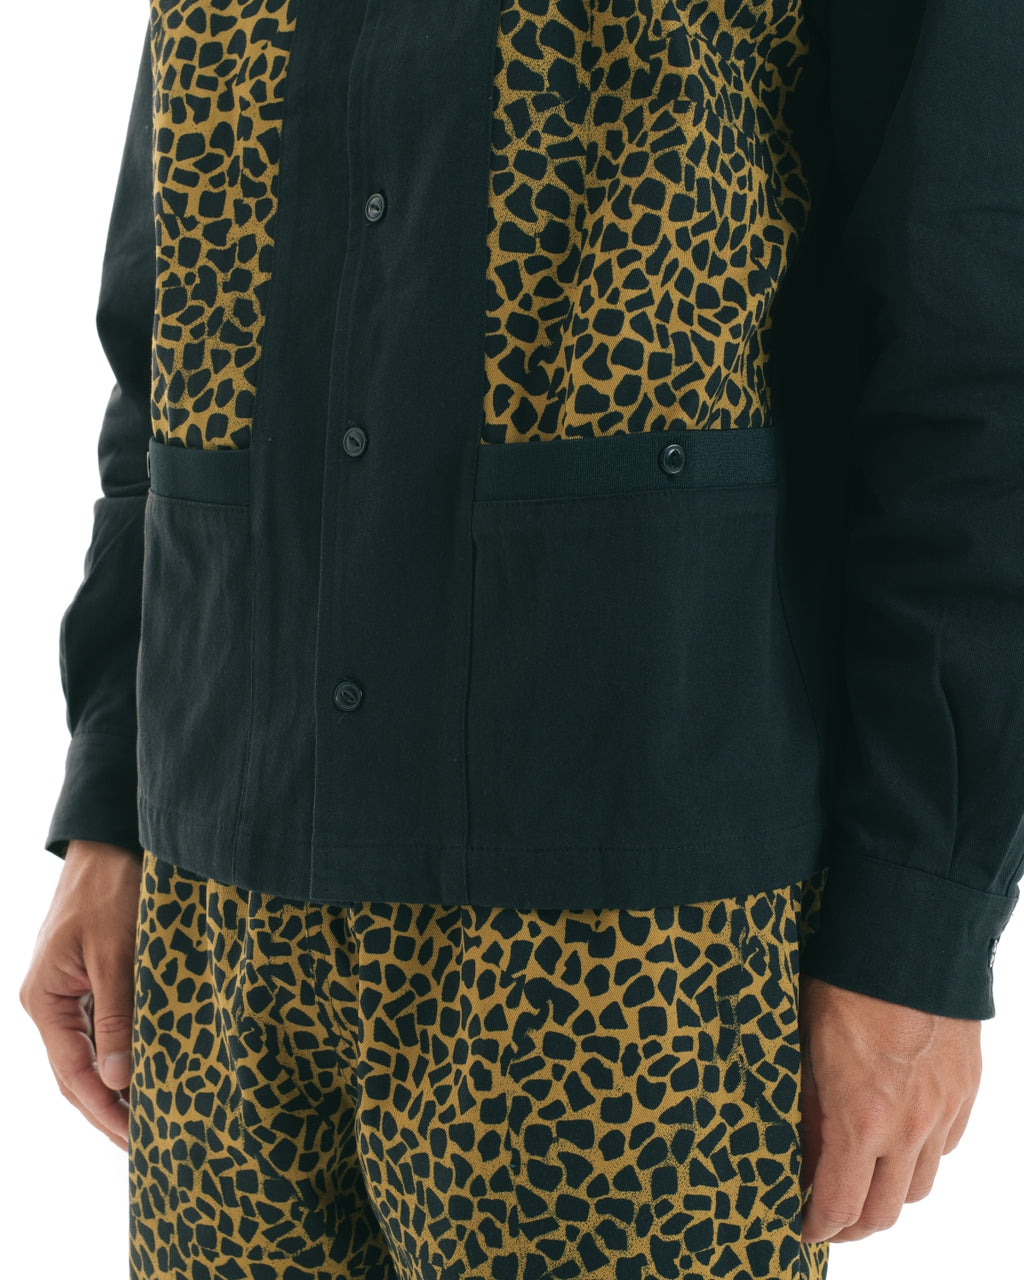 Cheetah Cabana Shirt - Leopard / Black 8